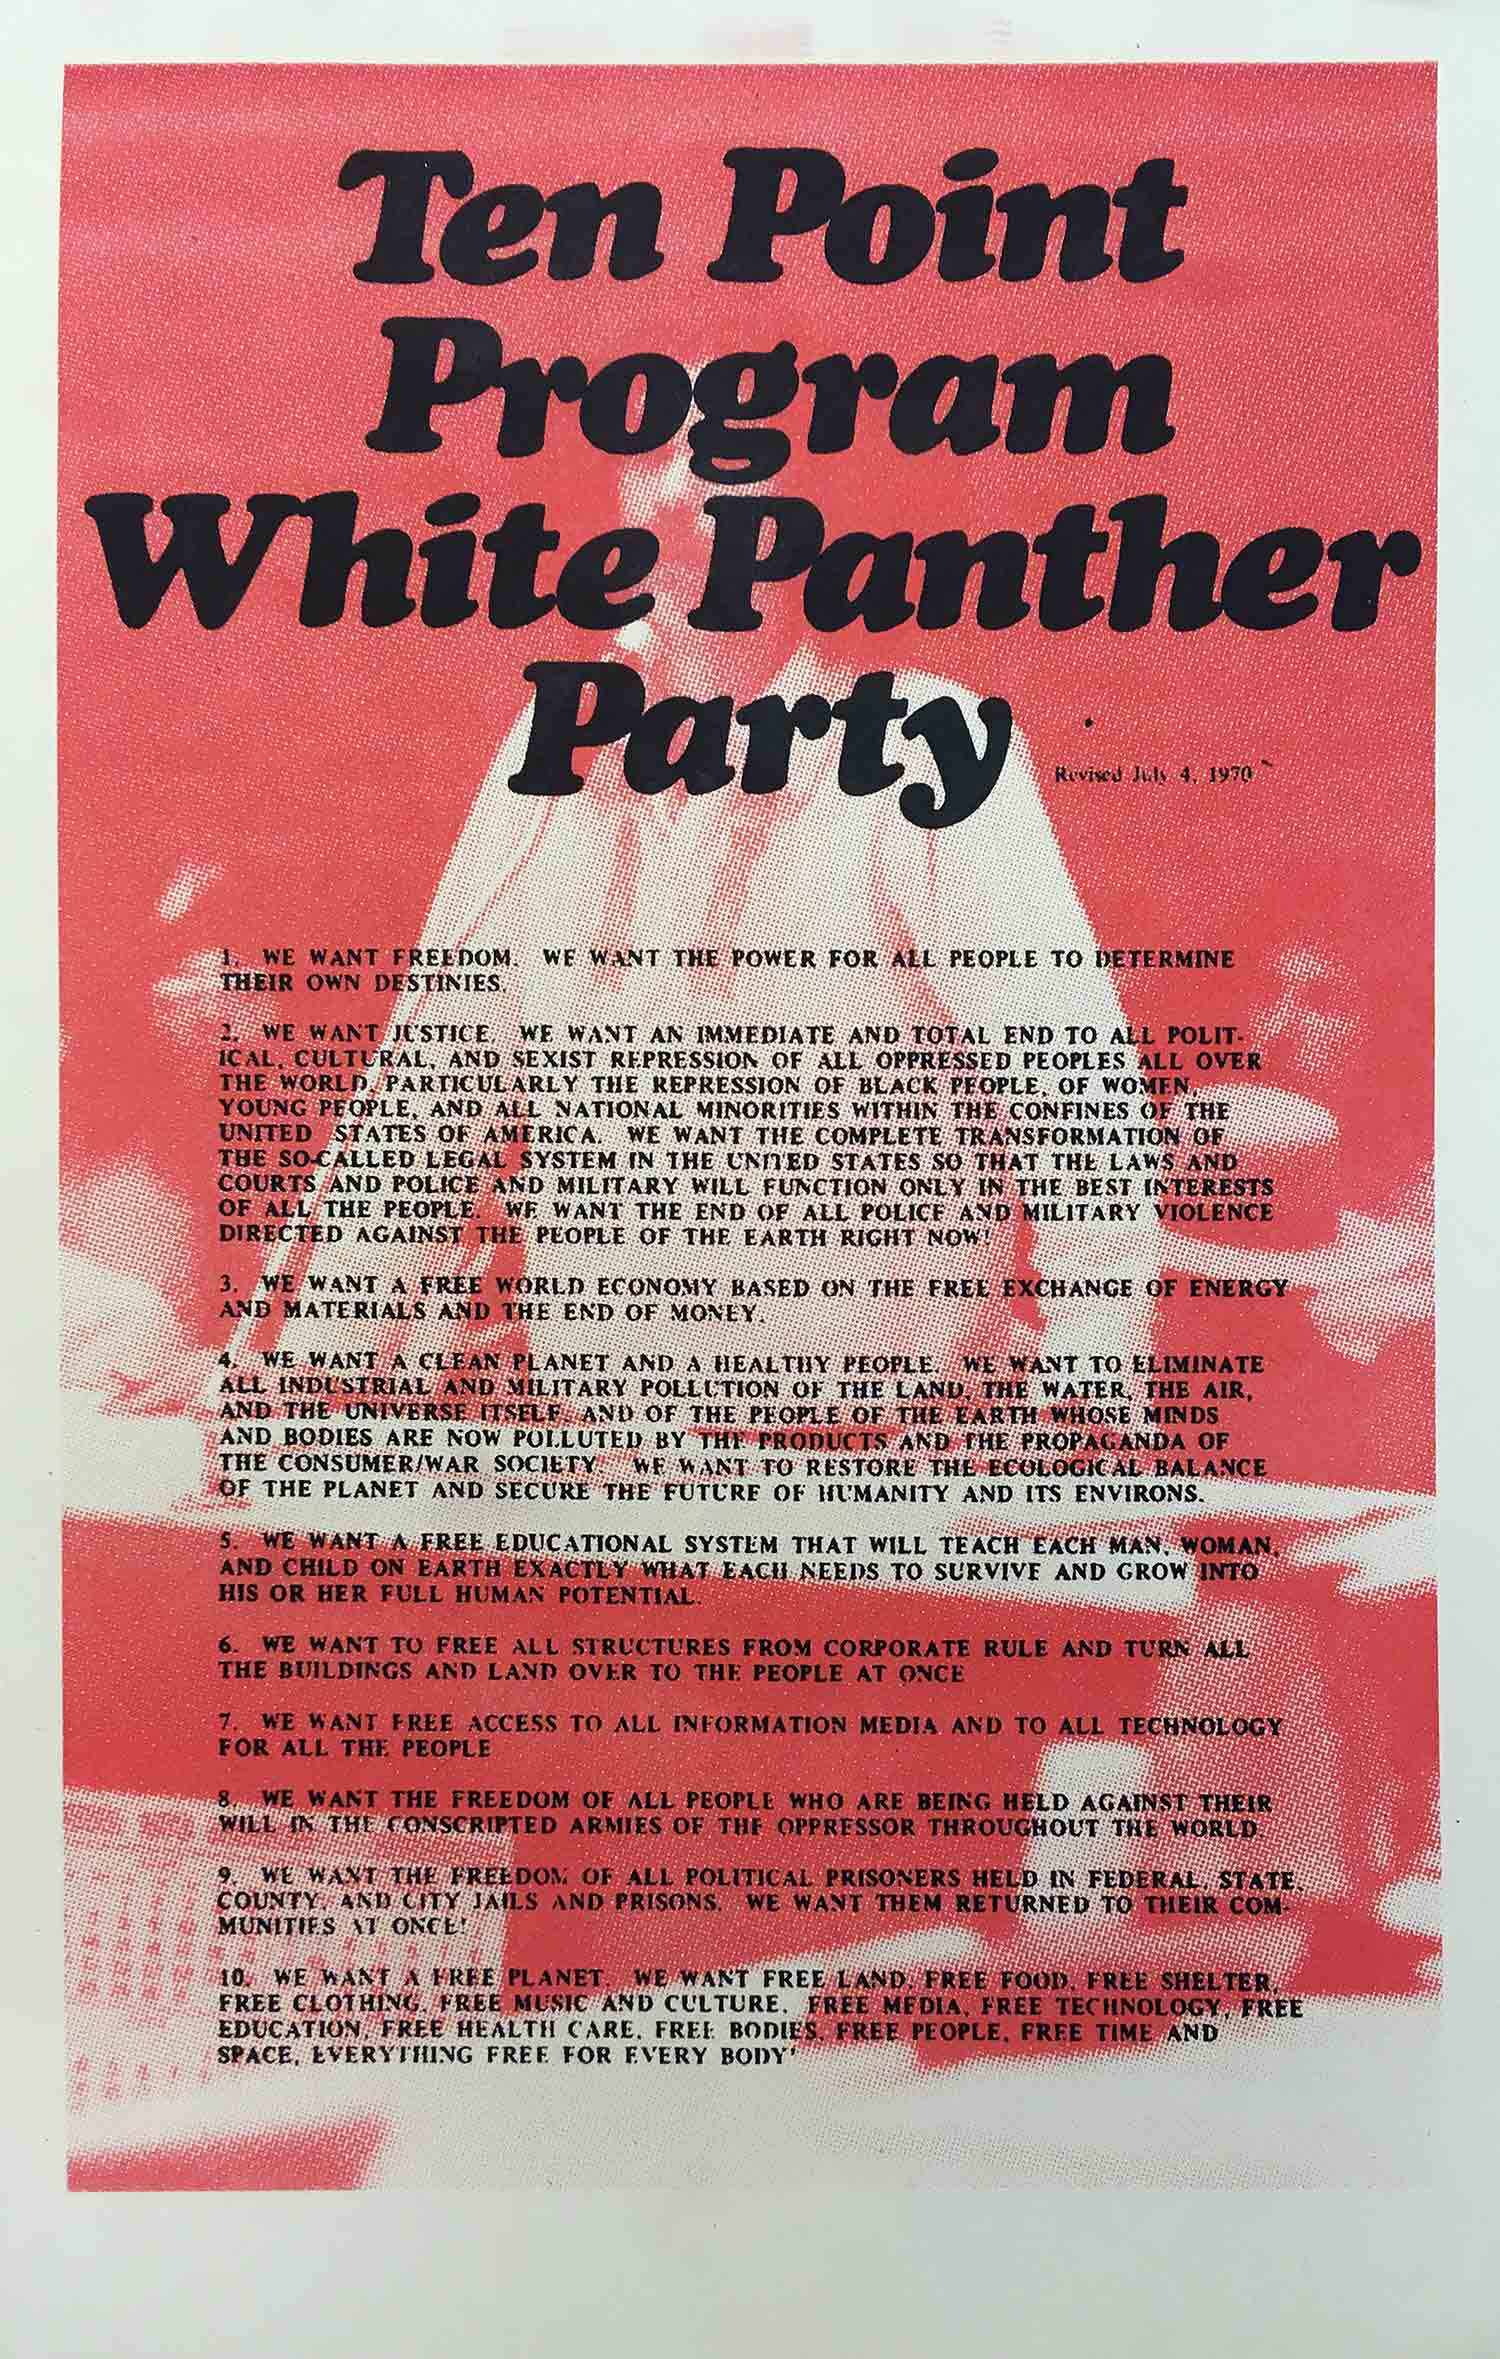 Ten Point Program: White Panther Party